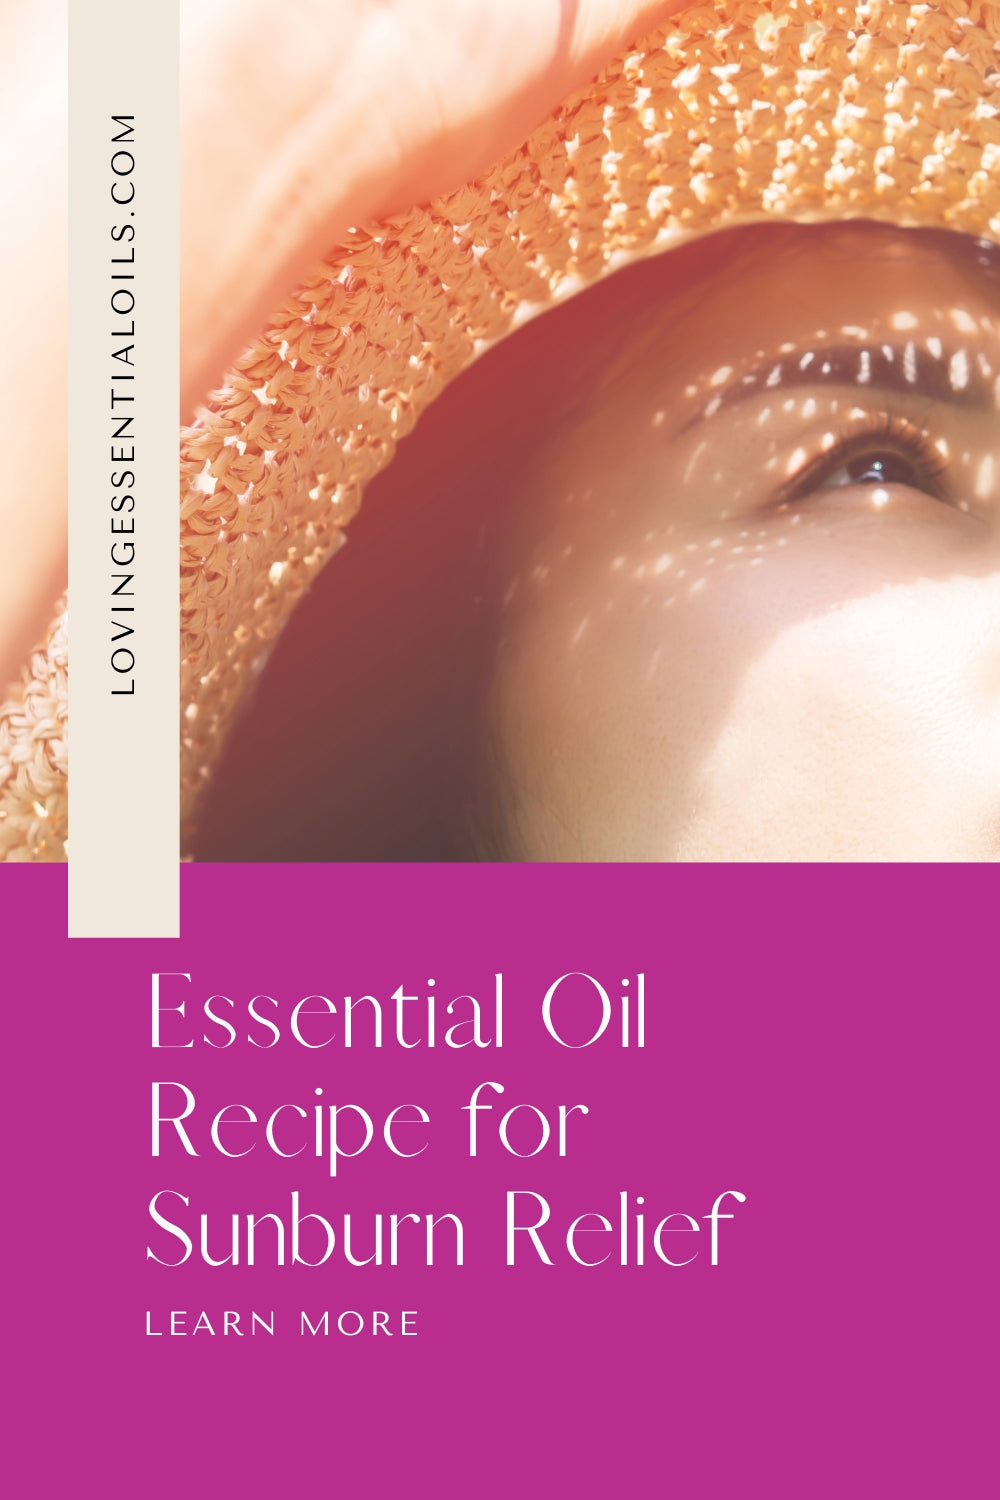 Sunburn Relief Essential Oil Recipe by Loving Essential Oils